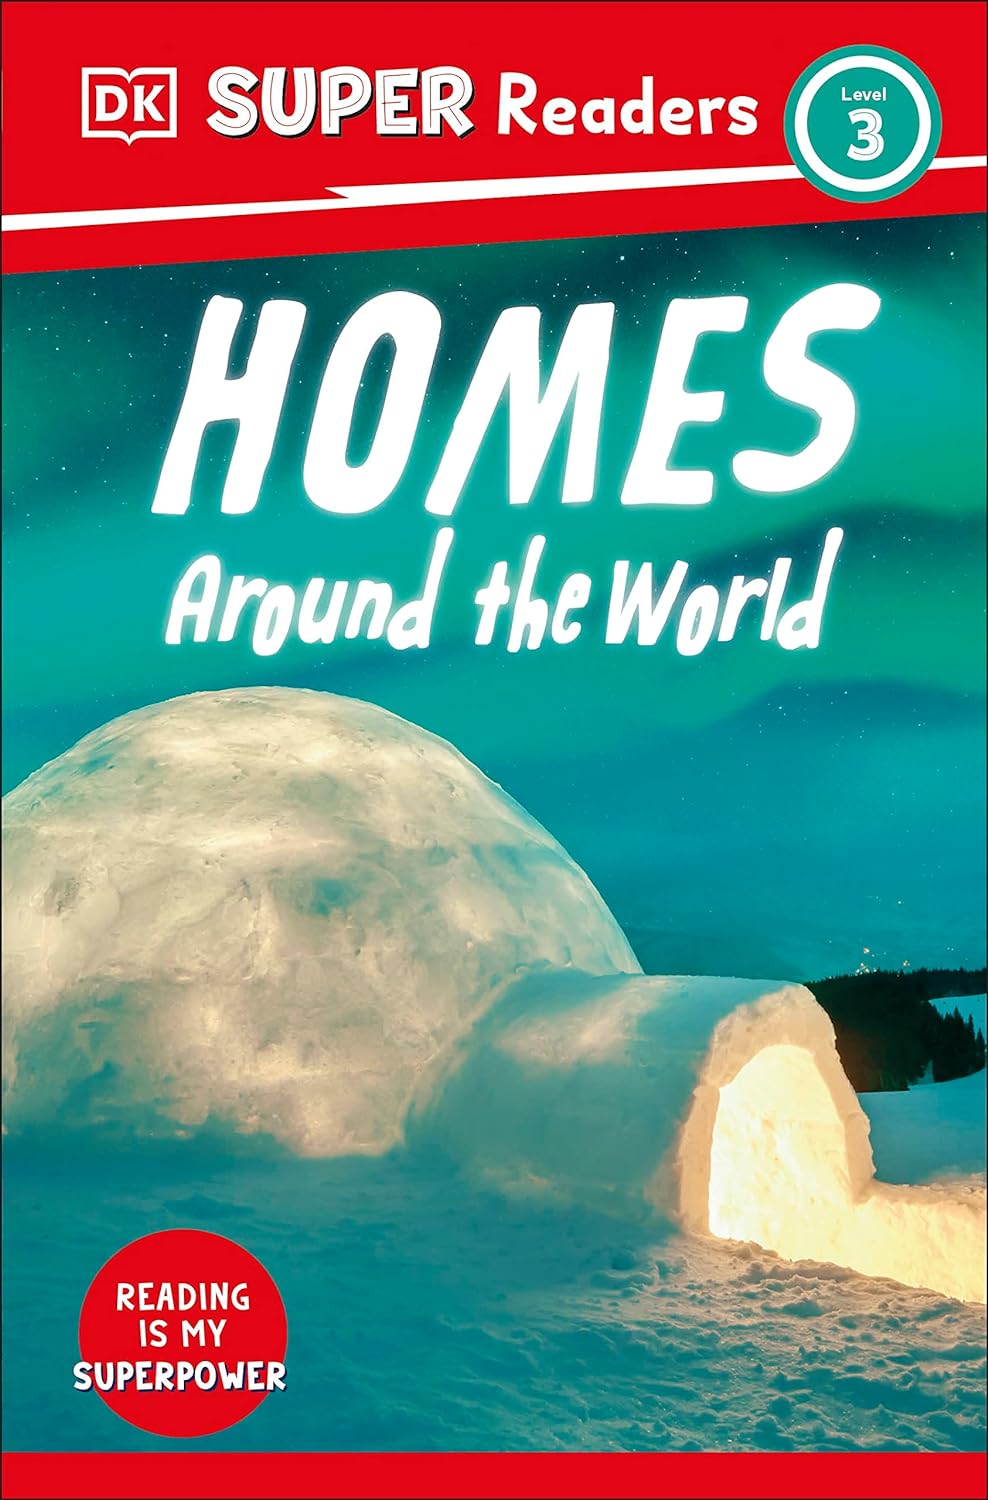 DK Super Readers Level 3 - Homes Around the World